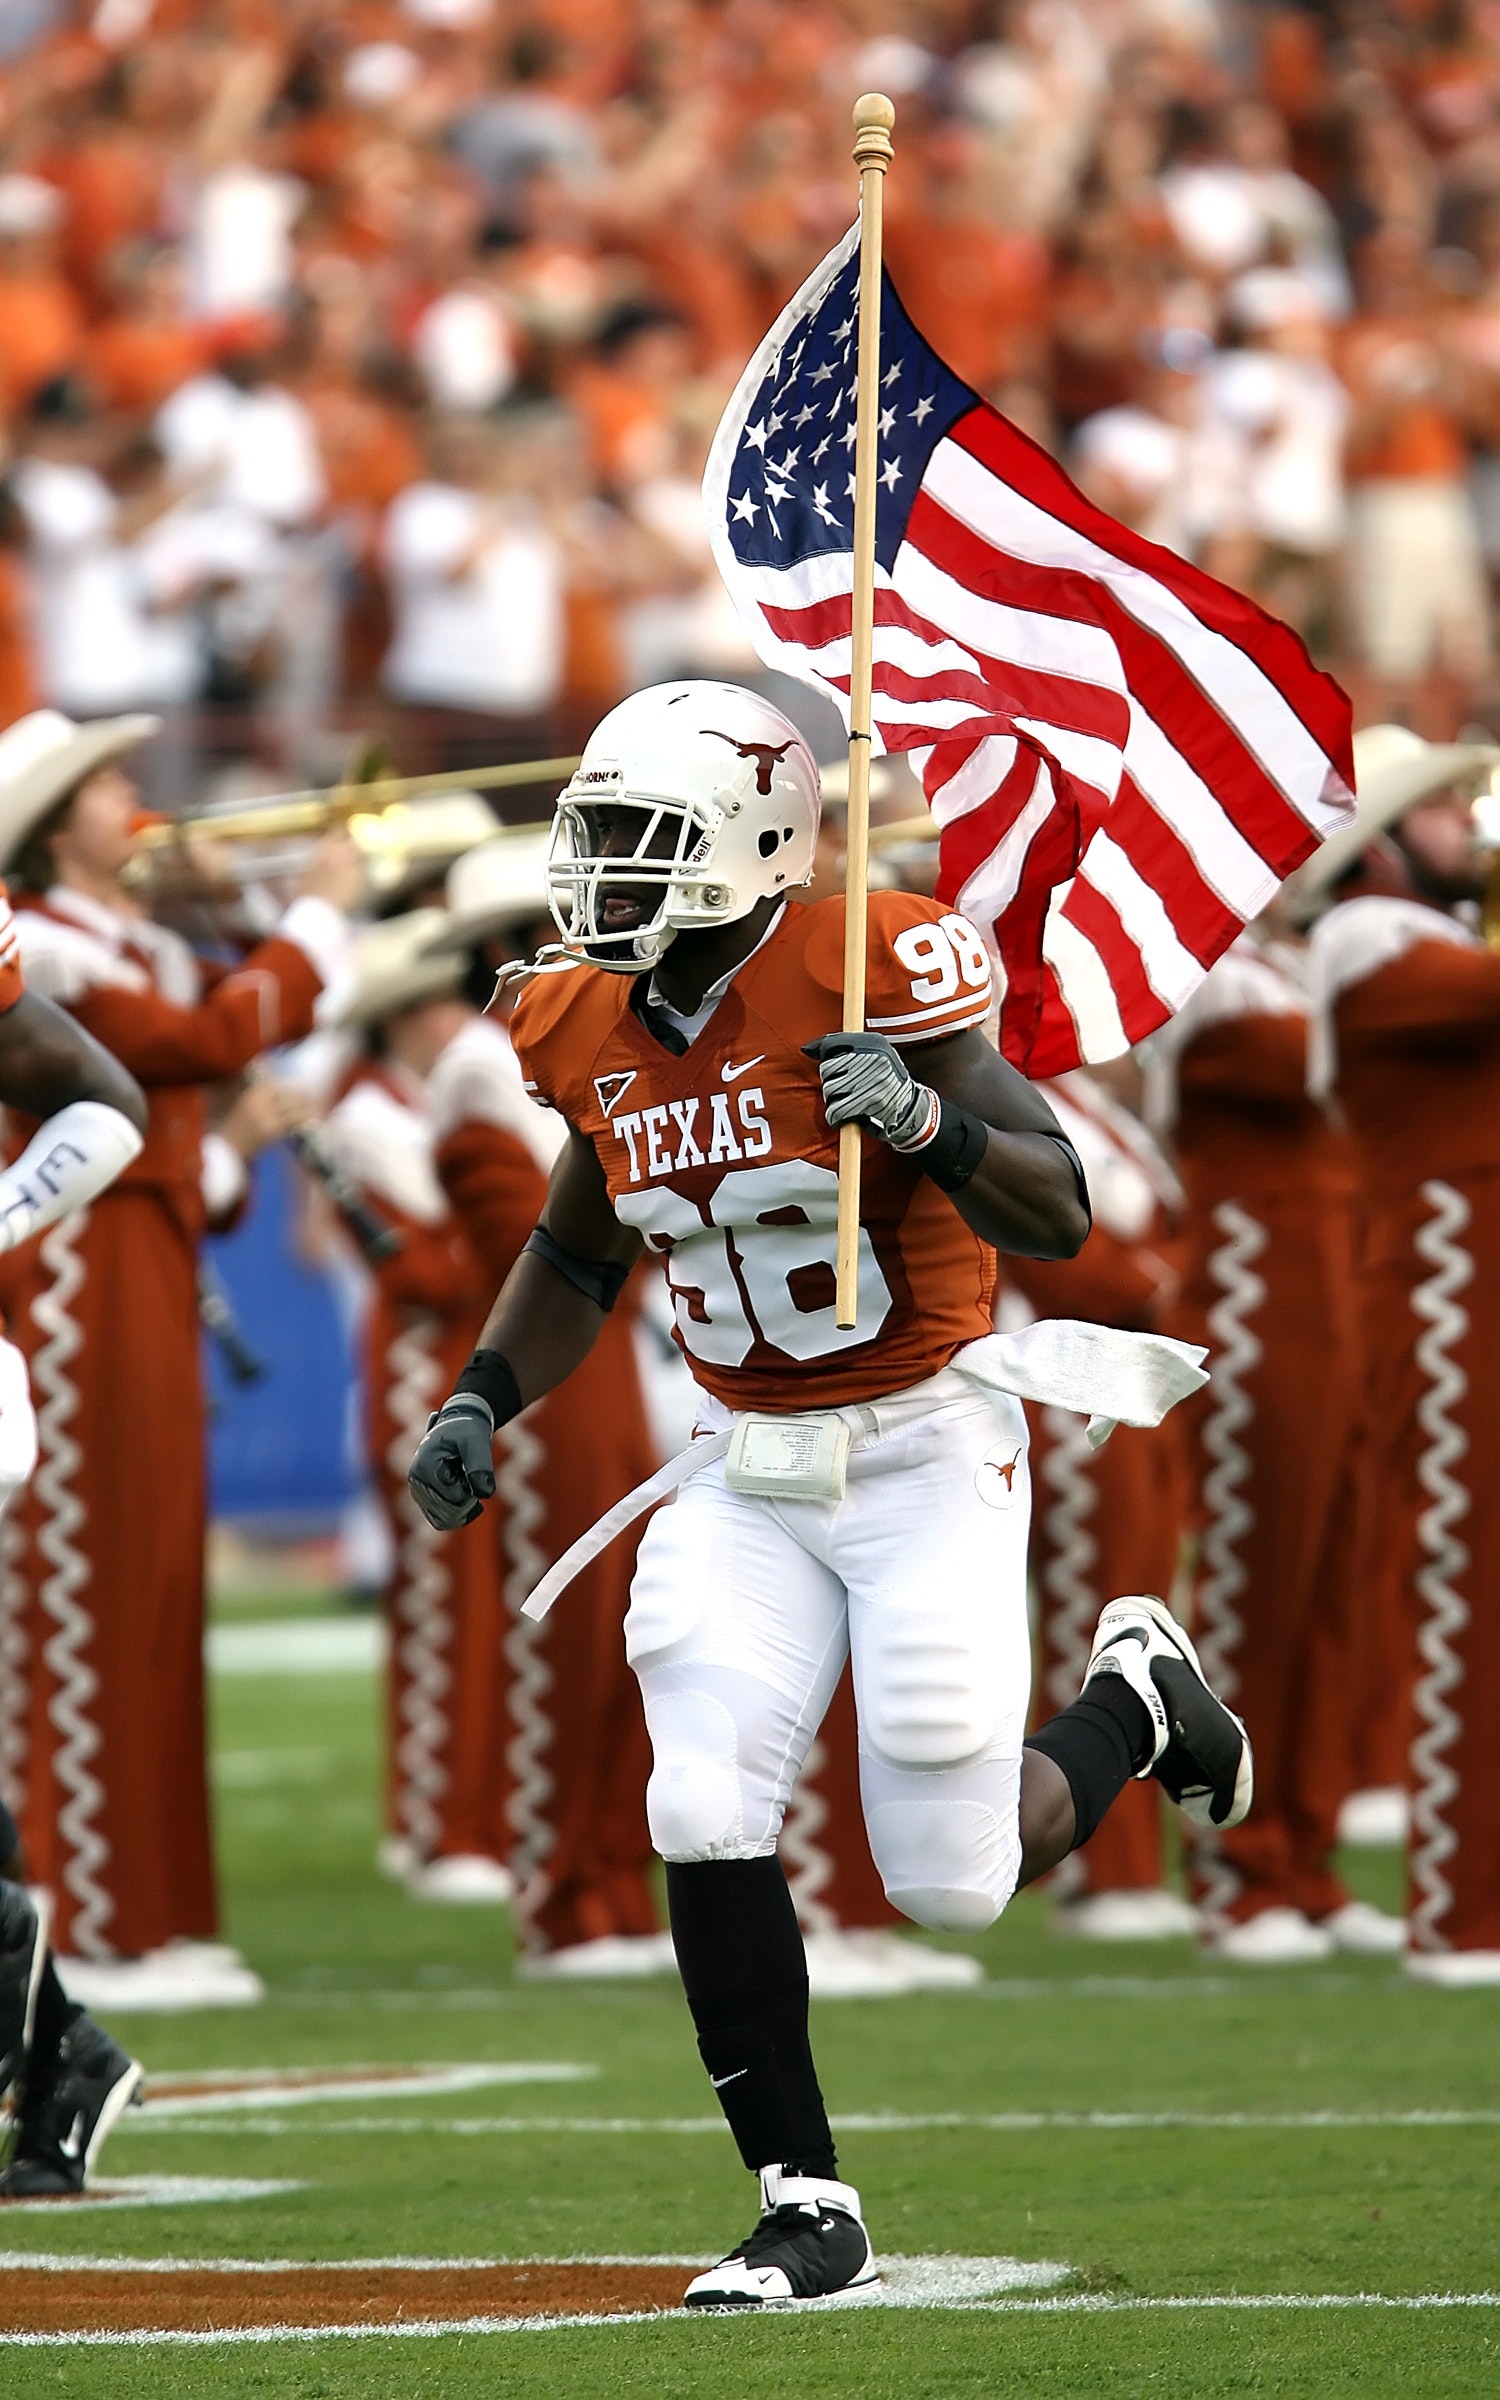 Nfl Player Holding U.s.a. Flag on Field, American flag, Man, Texas, Stadium, HQ Photo